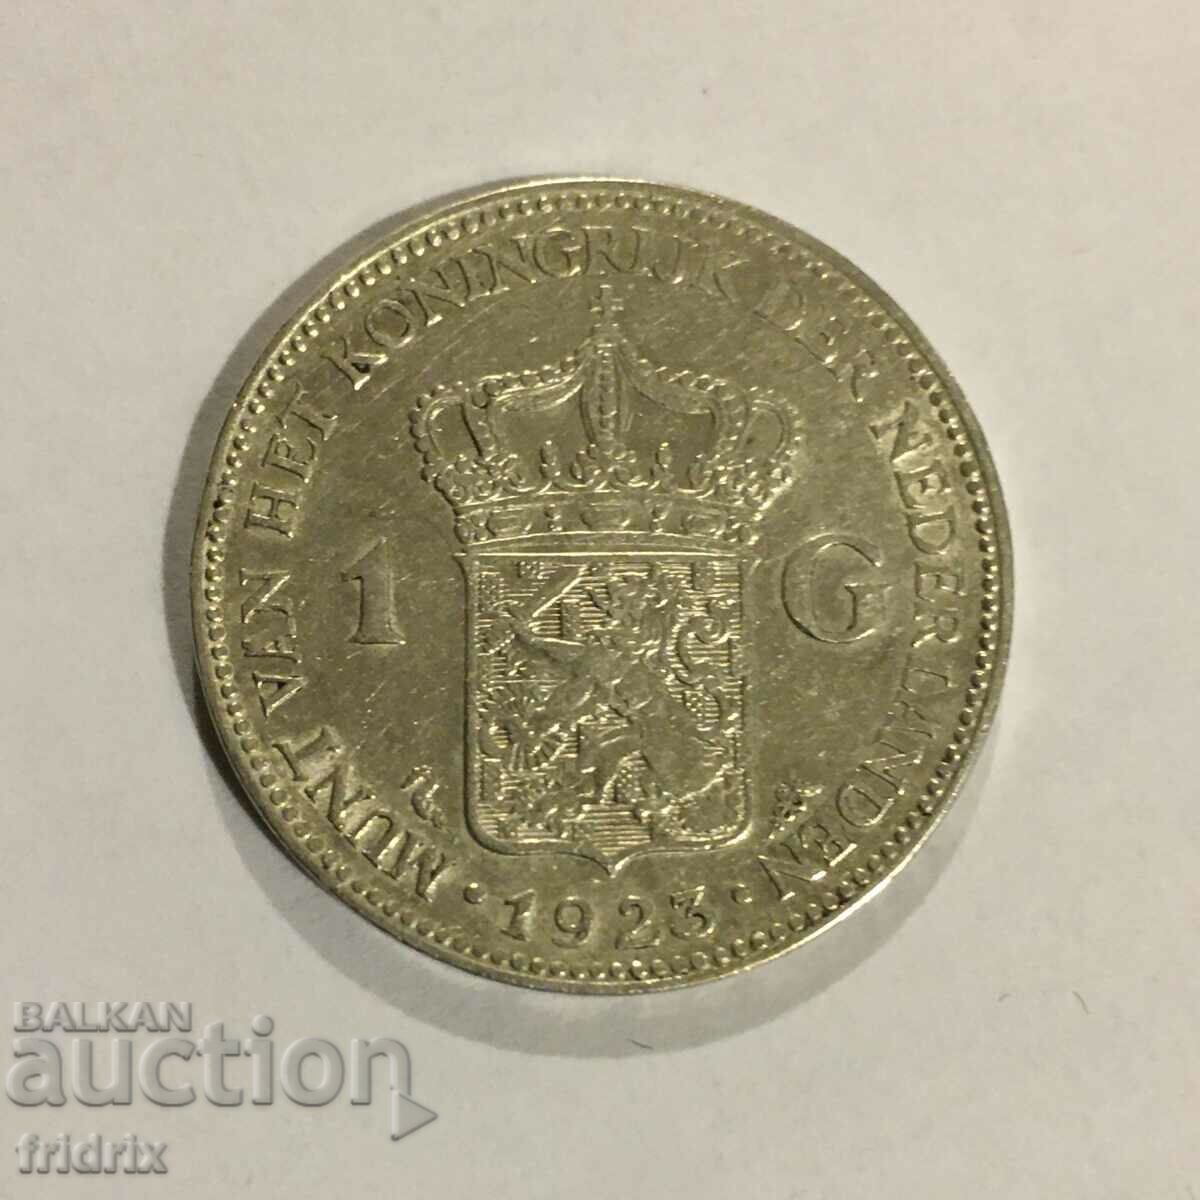 Țările de Jos 1 gulden 1923 / Olanda 1 gulden 1923